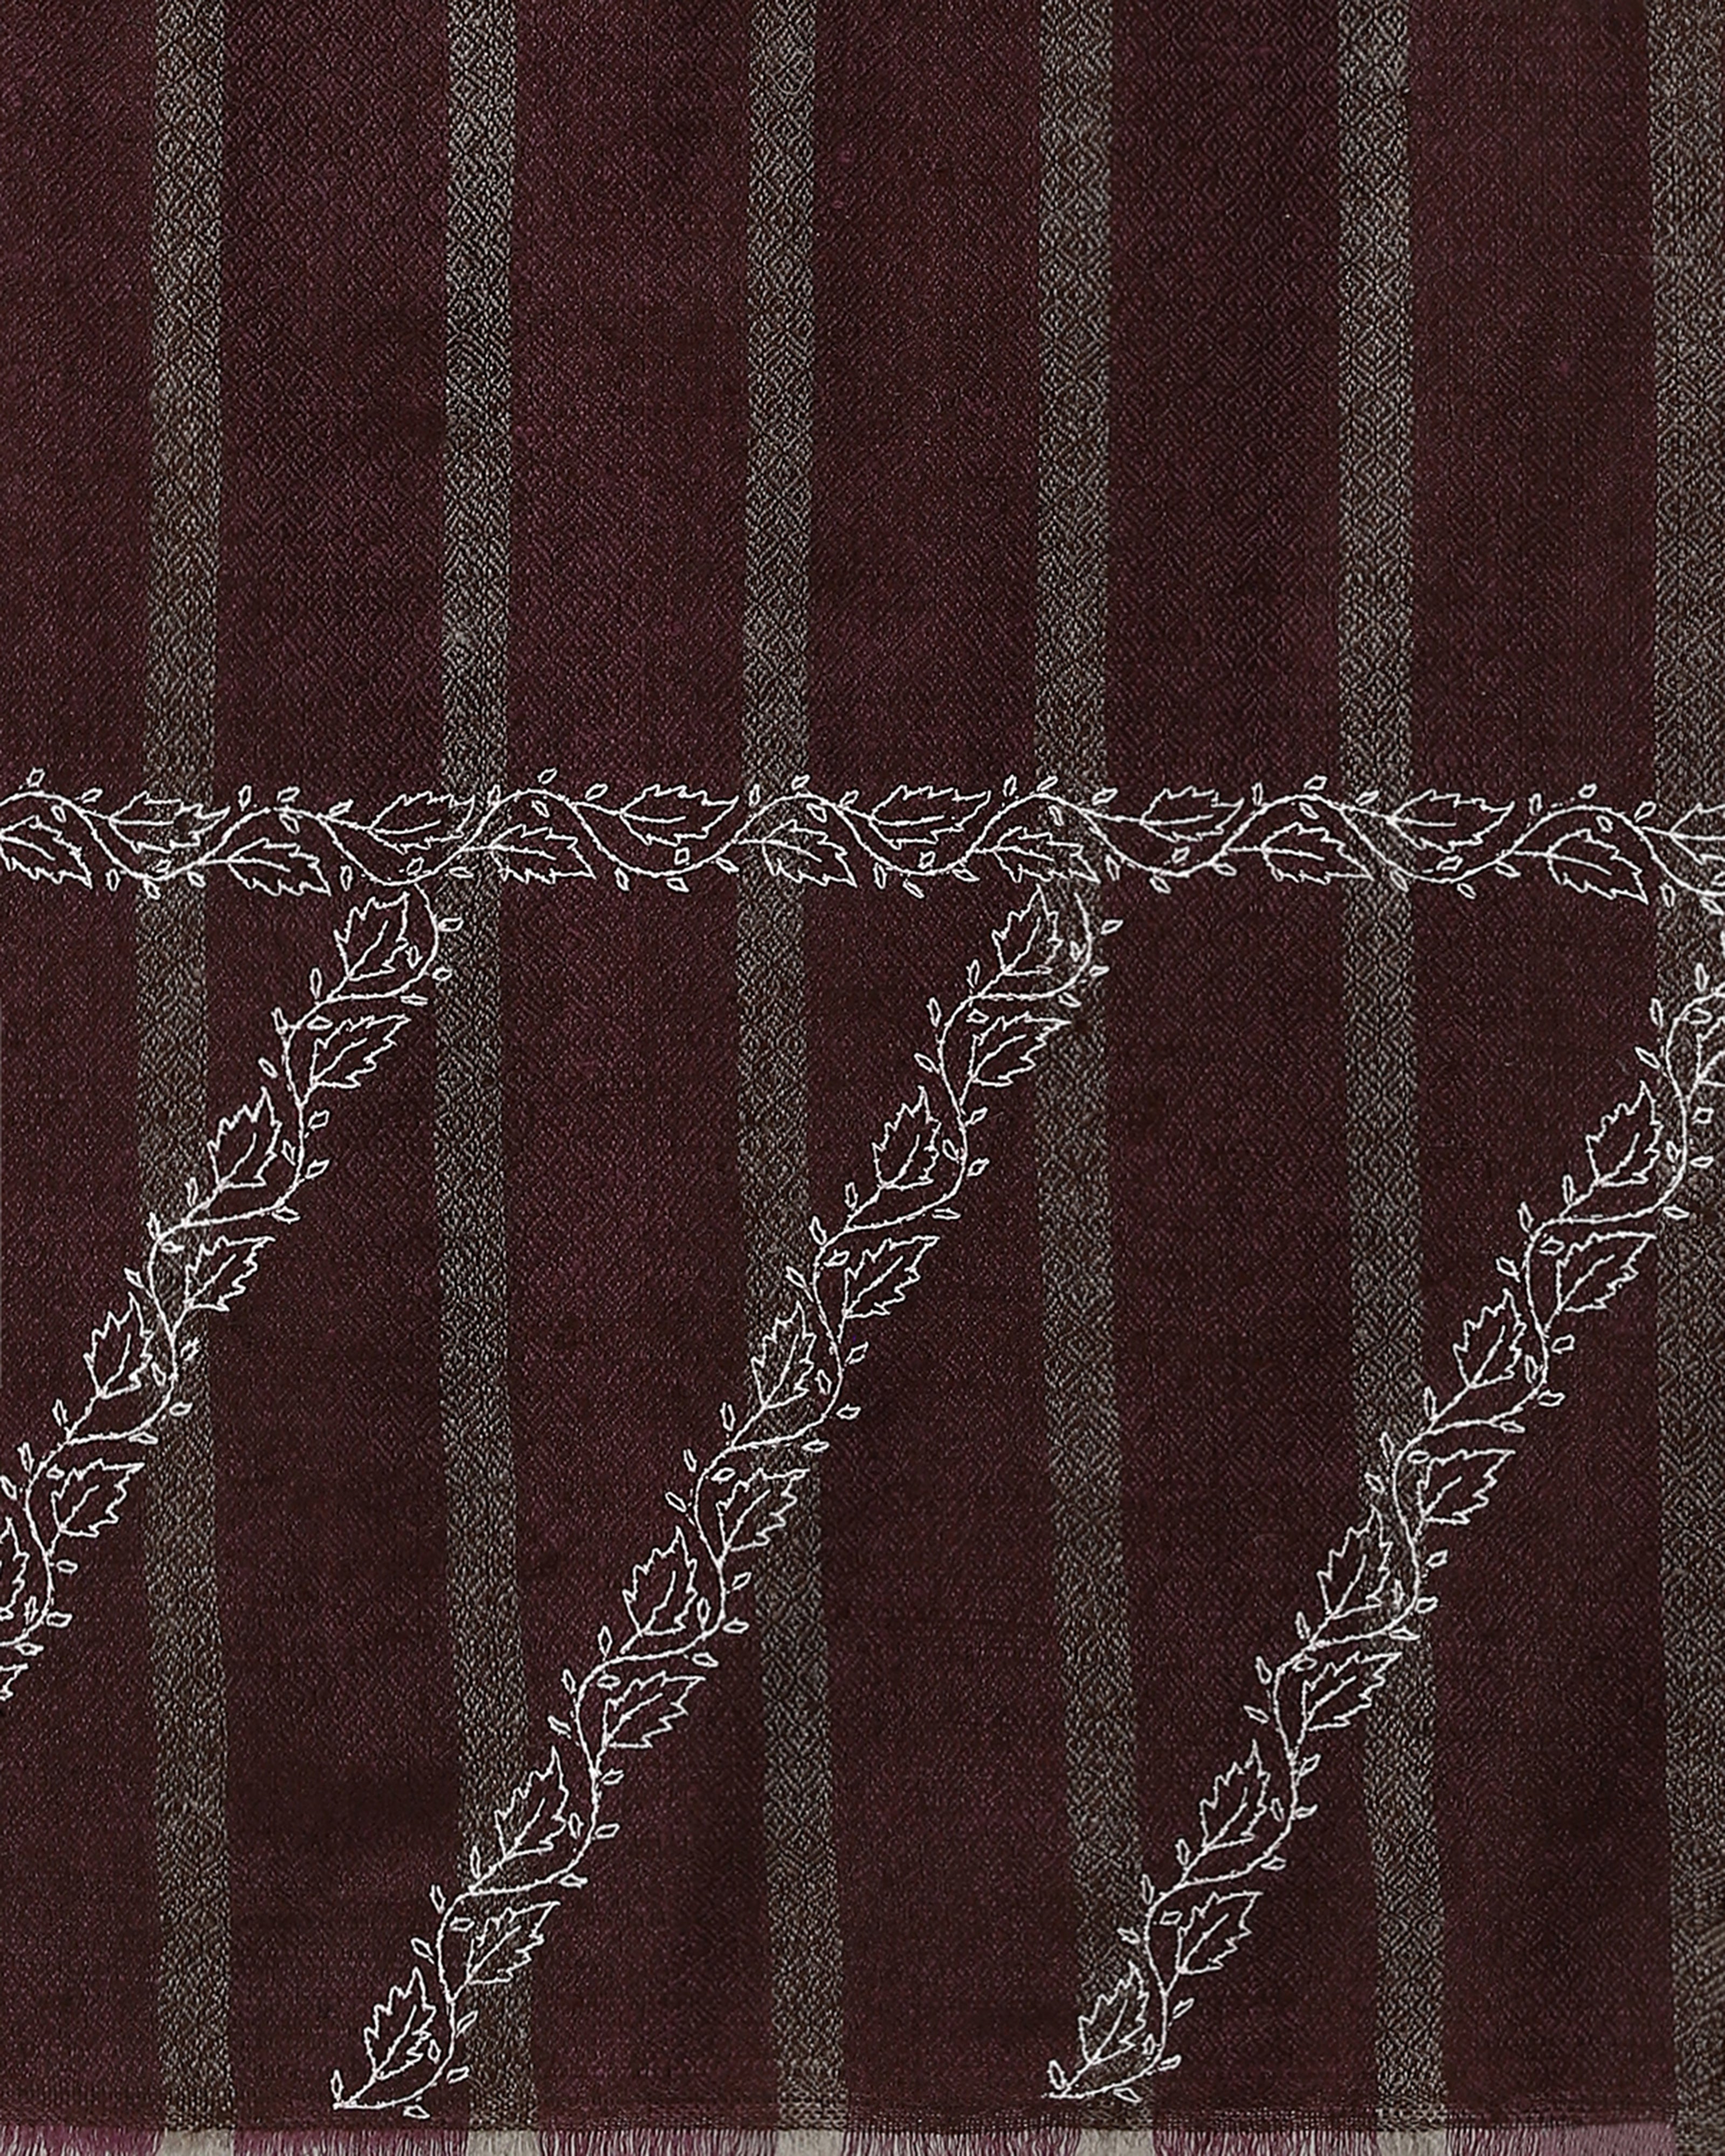 Raushan Sozni Embroidery Pashmina Shawl - Dark Brown